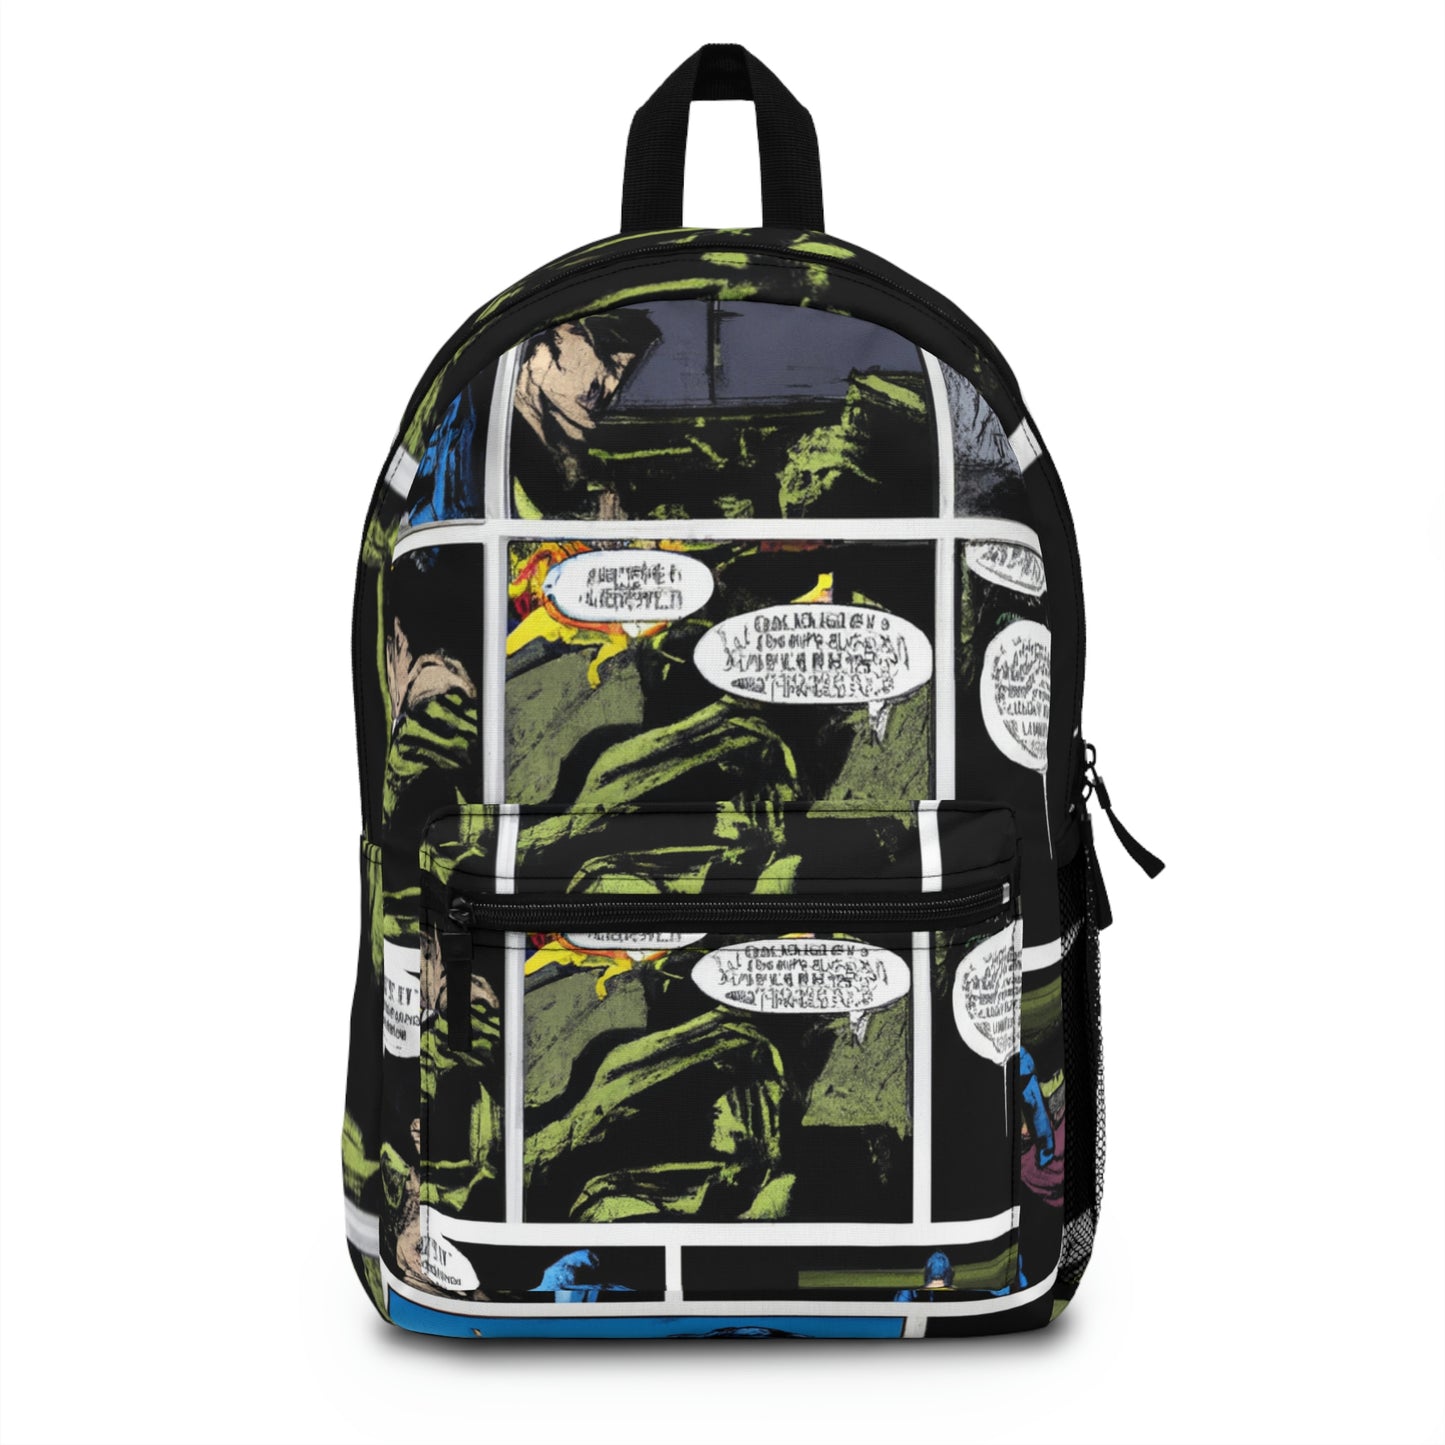 Storm Girl - Comic Book Backpack